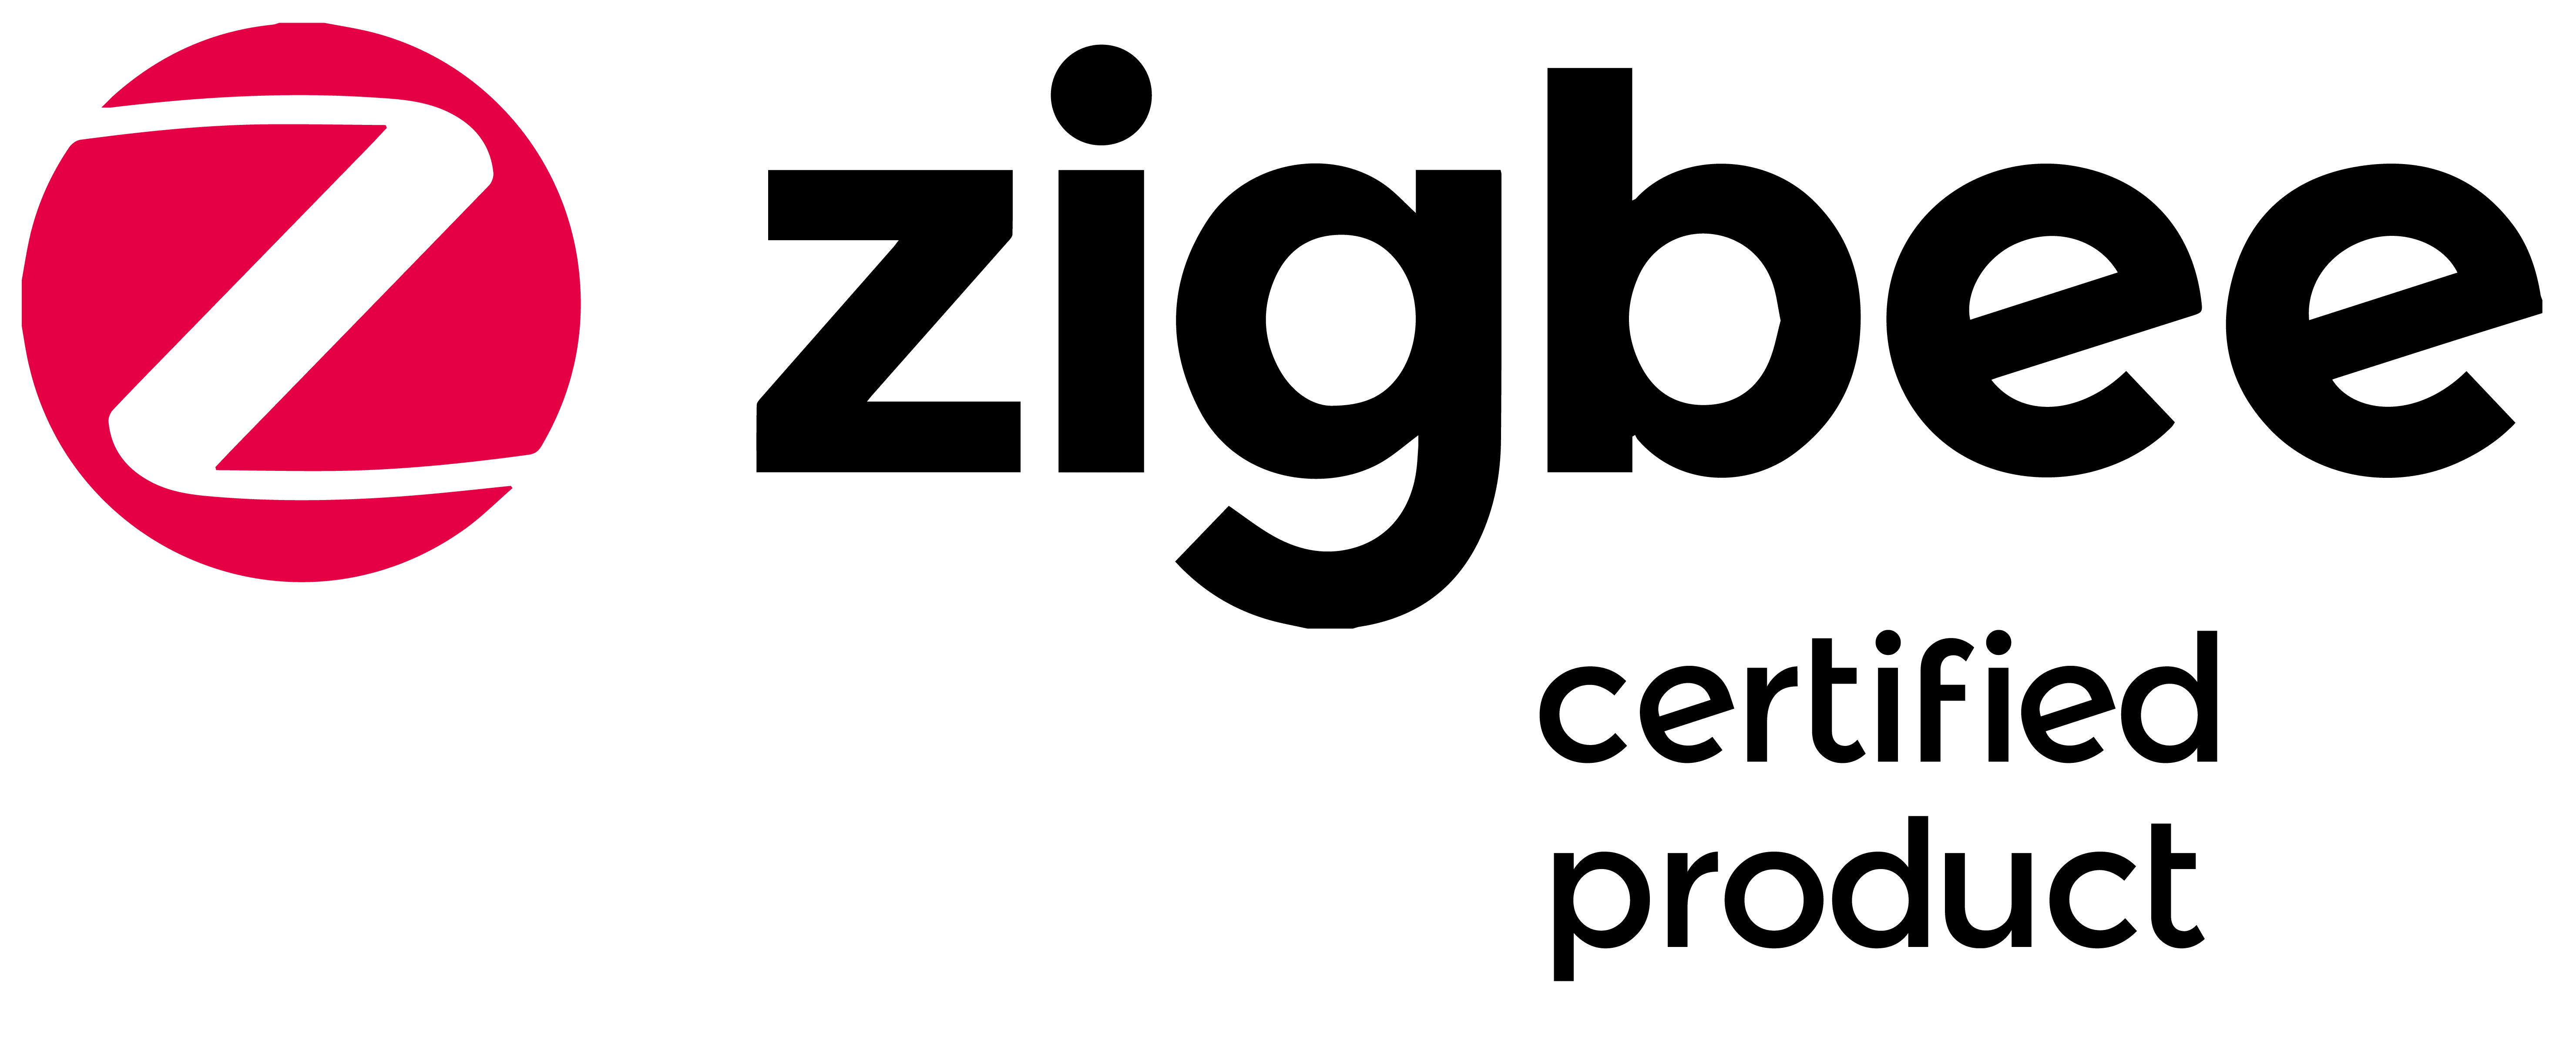 Zigbee Home Automation 1.2 compliant.